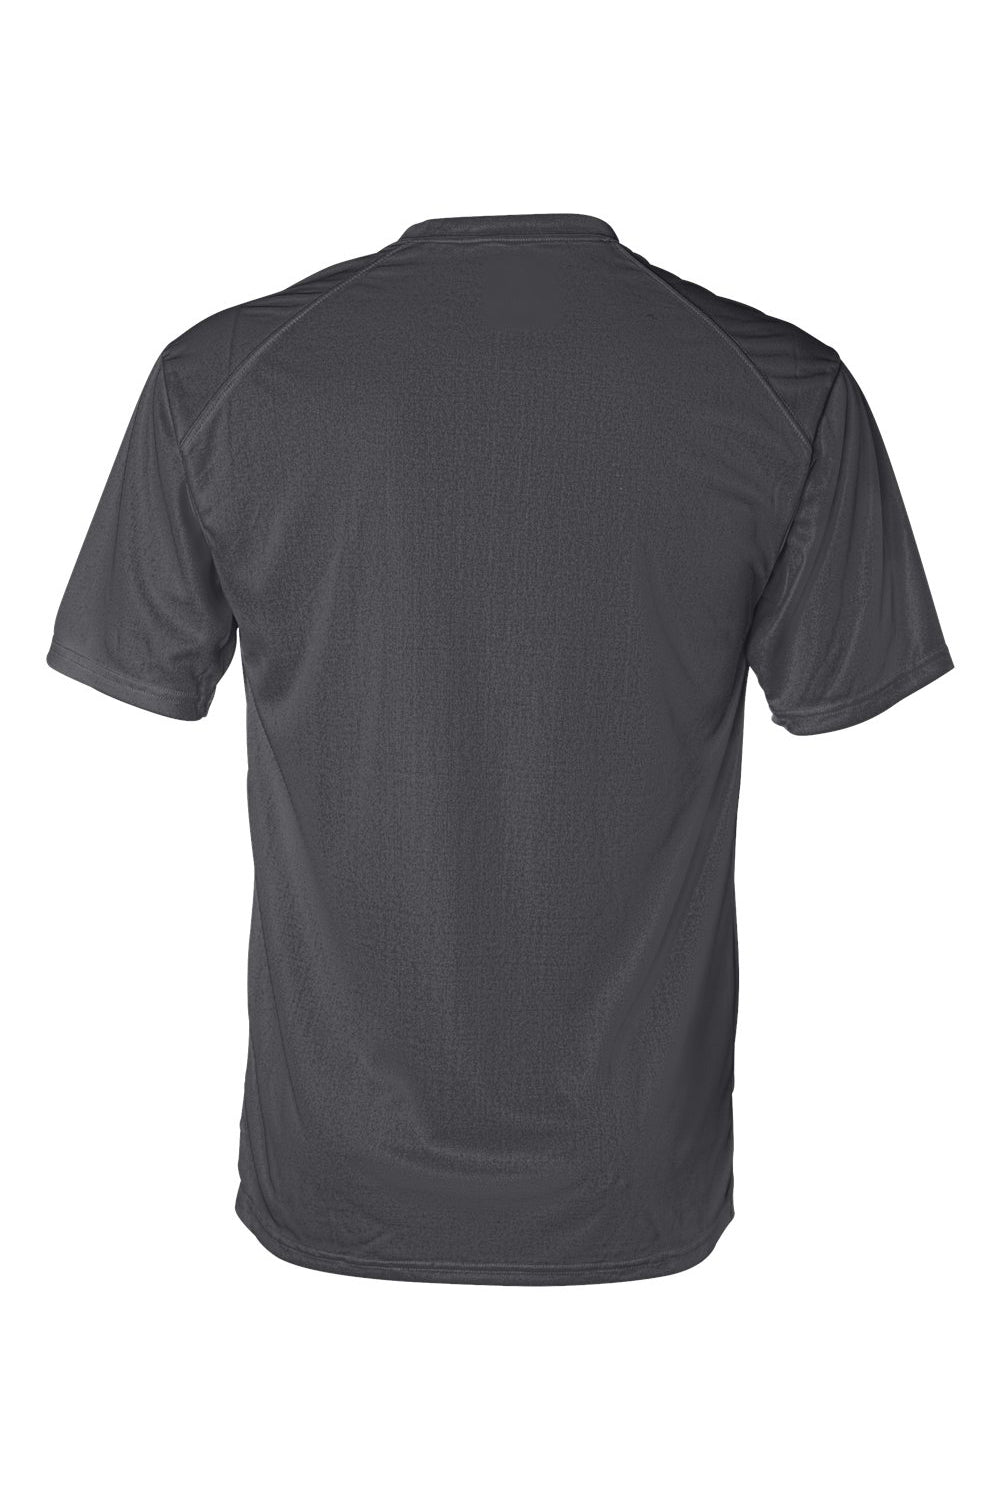 Badger 4120 Mens B-Core Moisture Wicking Short Sleeve Crewneck T-Shirt Graphite Grey Flat Back